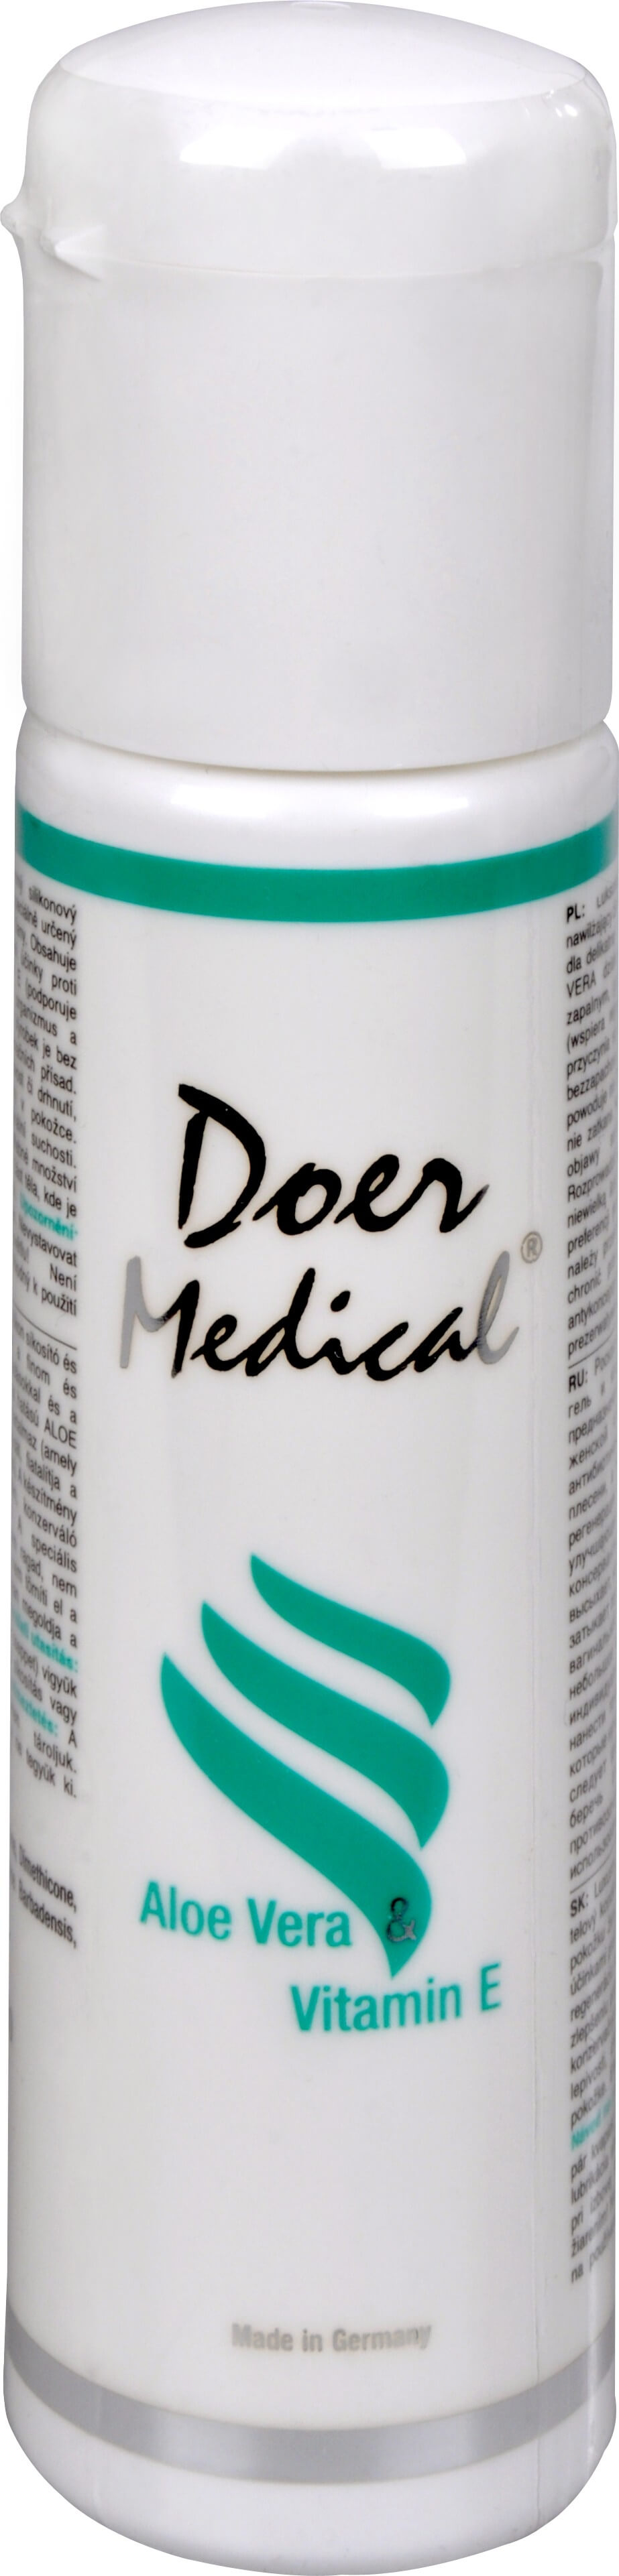 Doer Medical® Doer Medical Aloe vera & vitamín E 100 ml